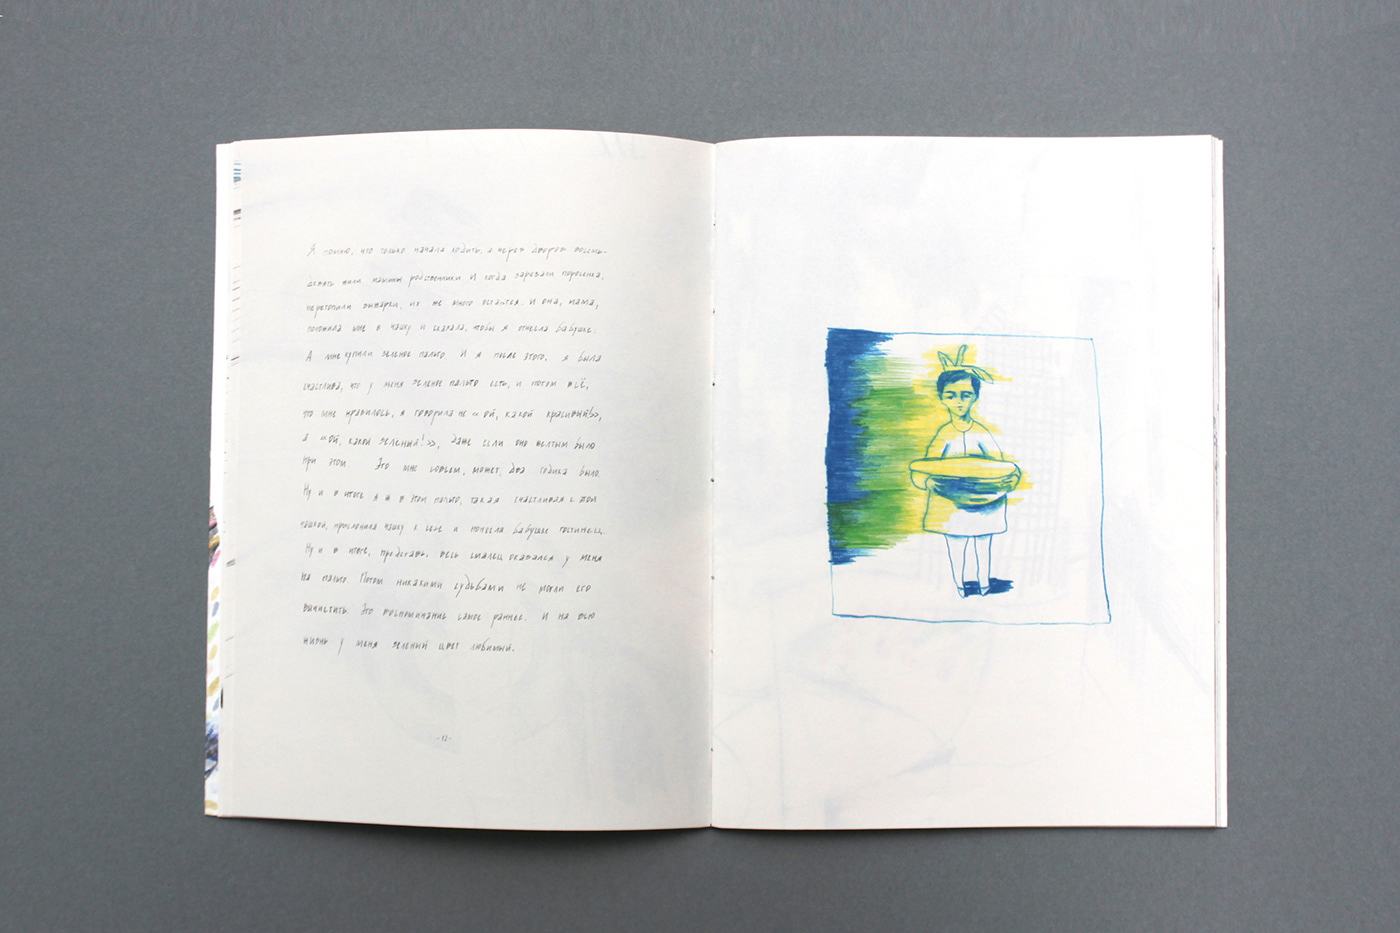 artist's book sketching sketch авторская книга книга графика Скетчинг деревня цветные карандаши